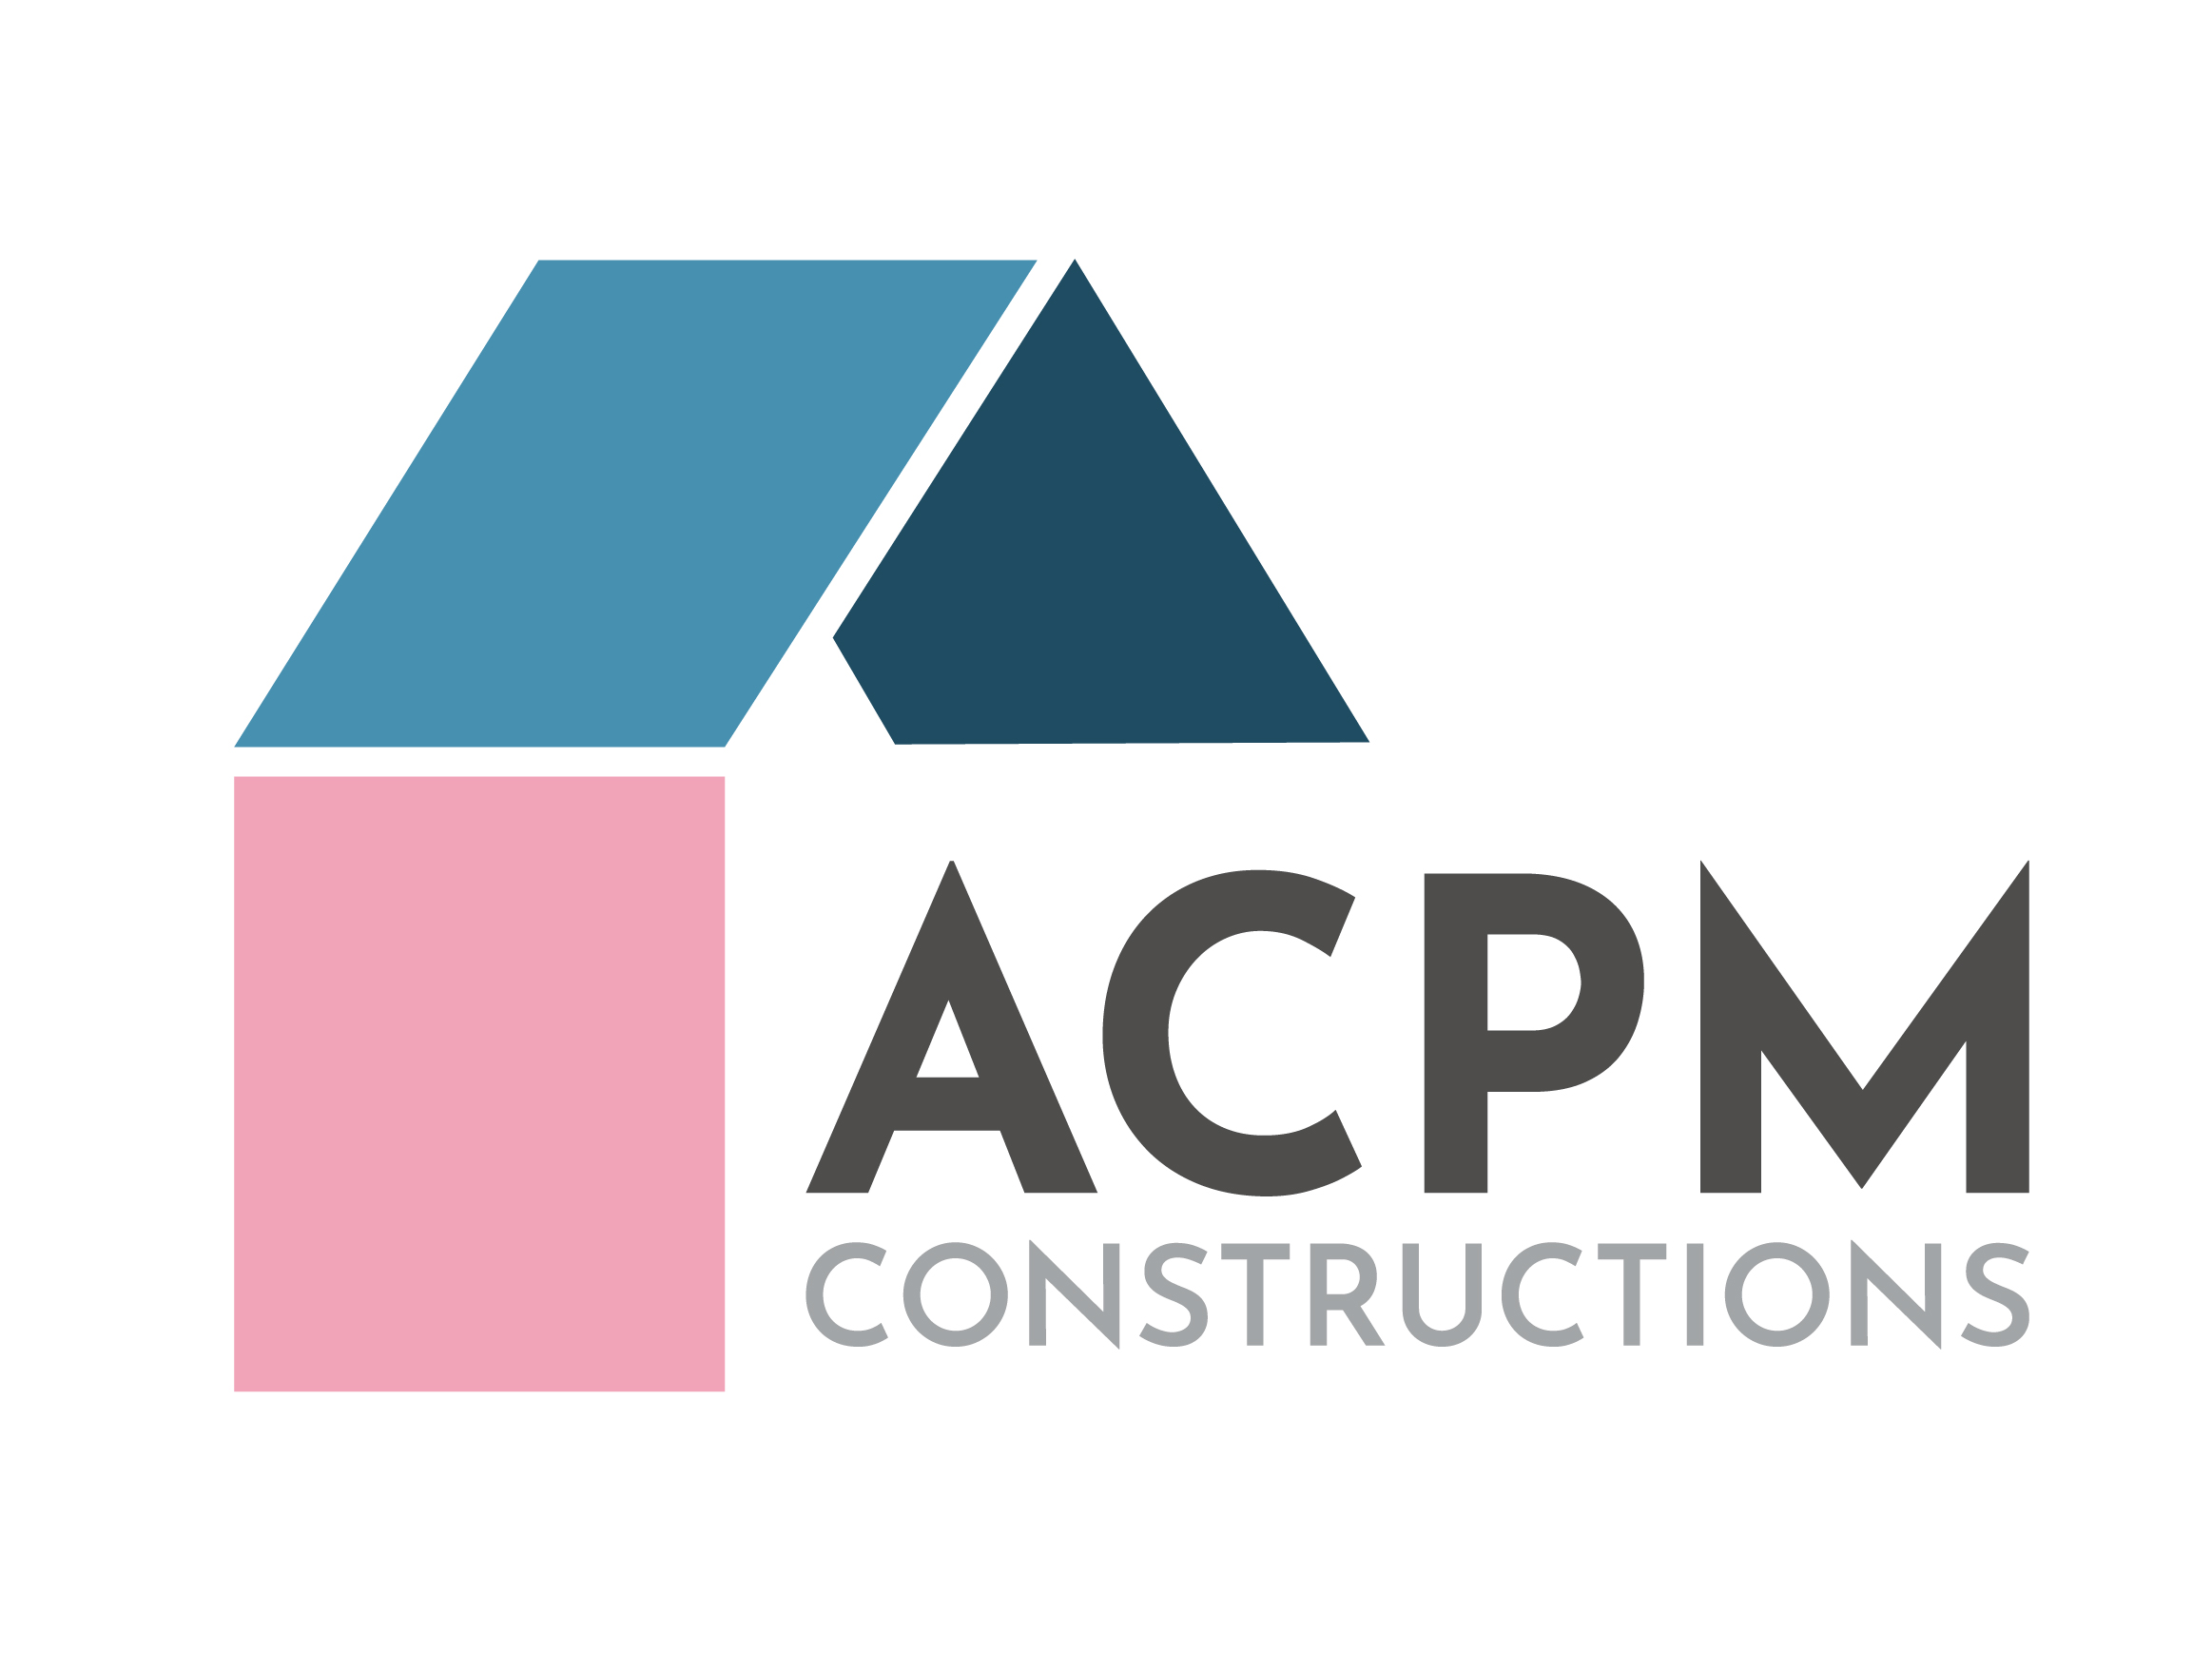 ACPM CONSTRUCTION LOGO